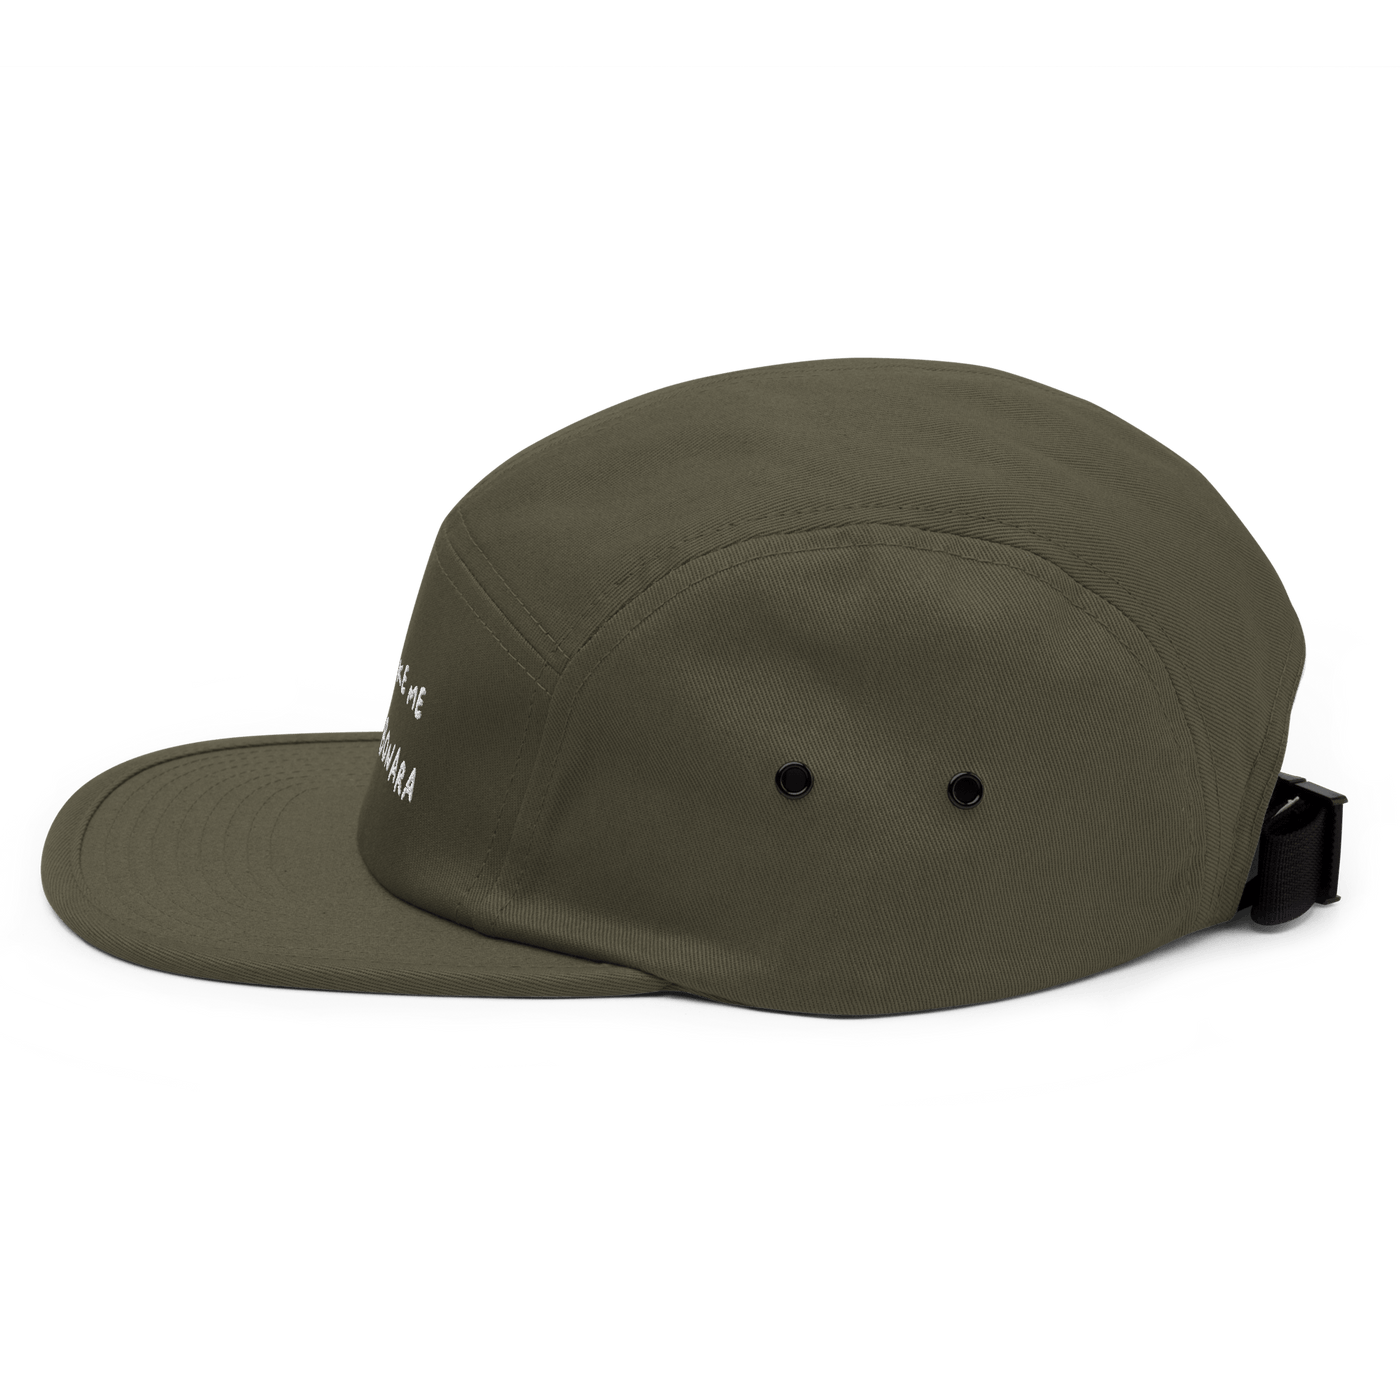 Make me Carbonara Five Panel Hat - Olive - - Just Another Cap Store